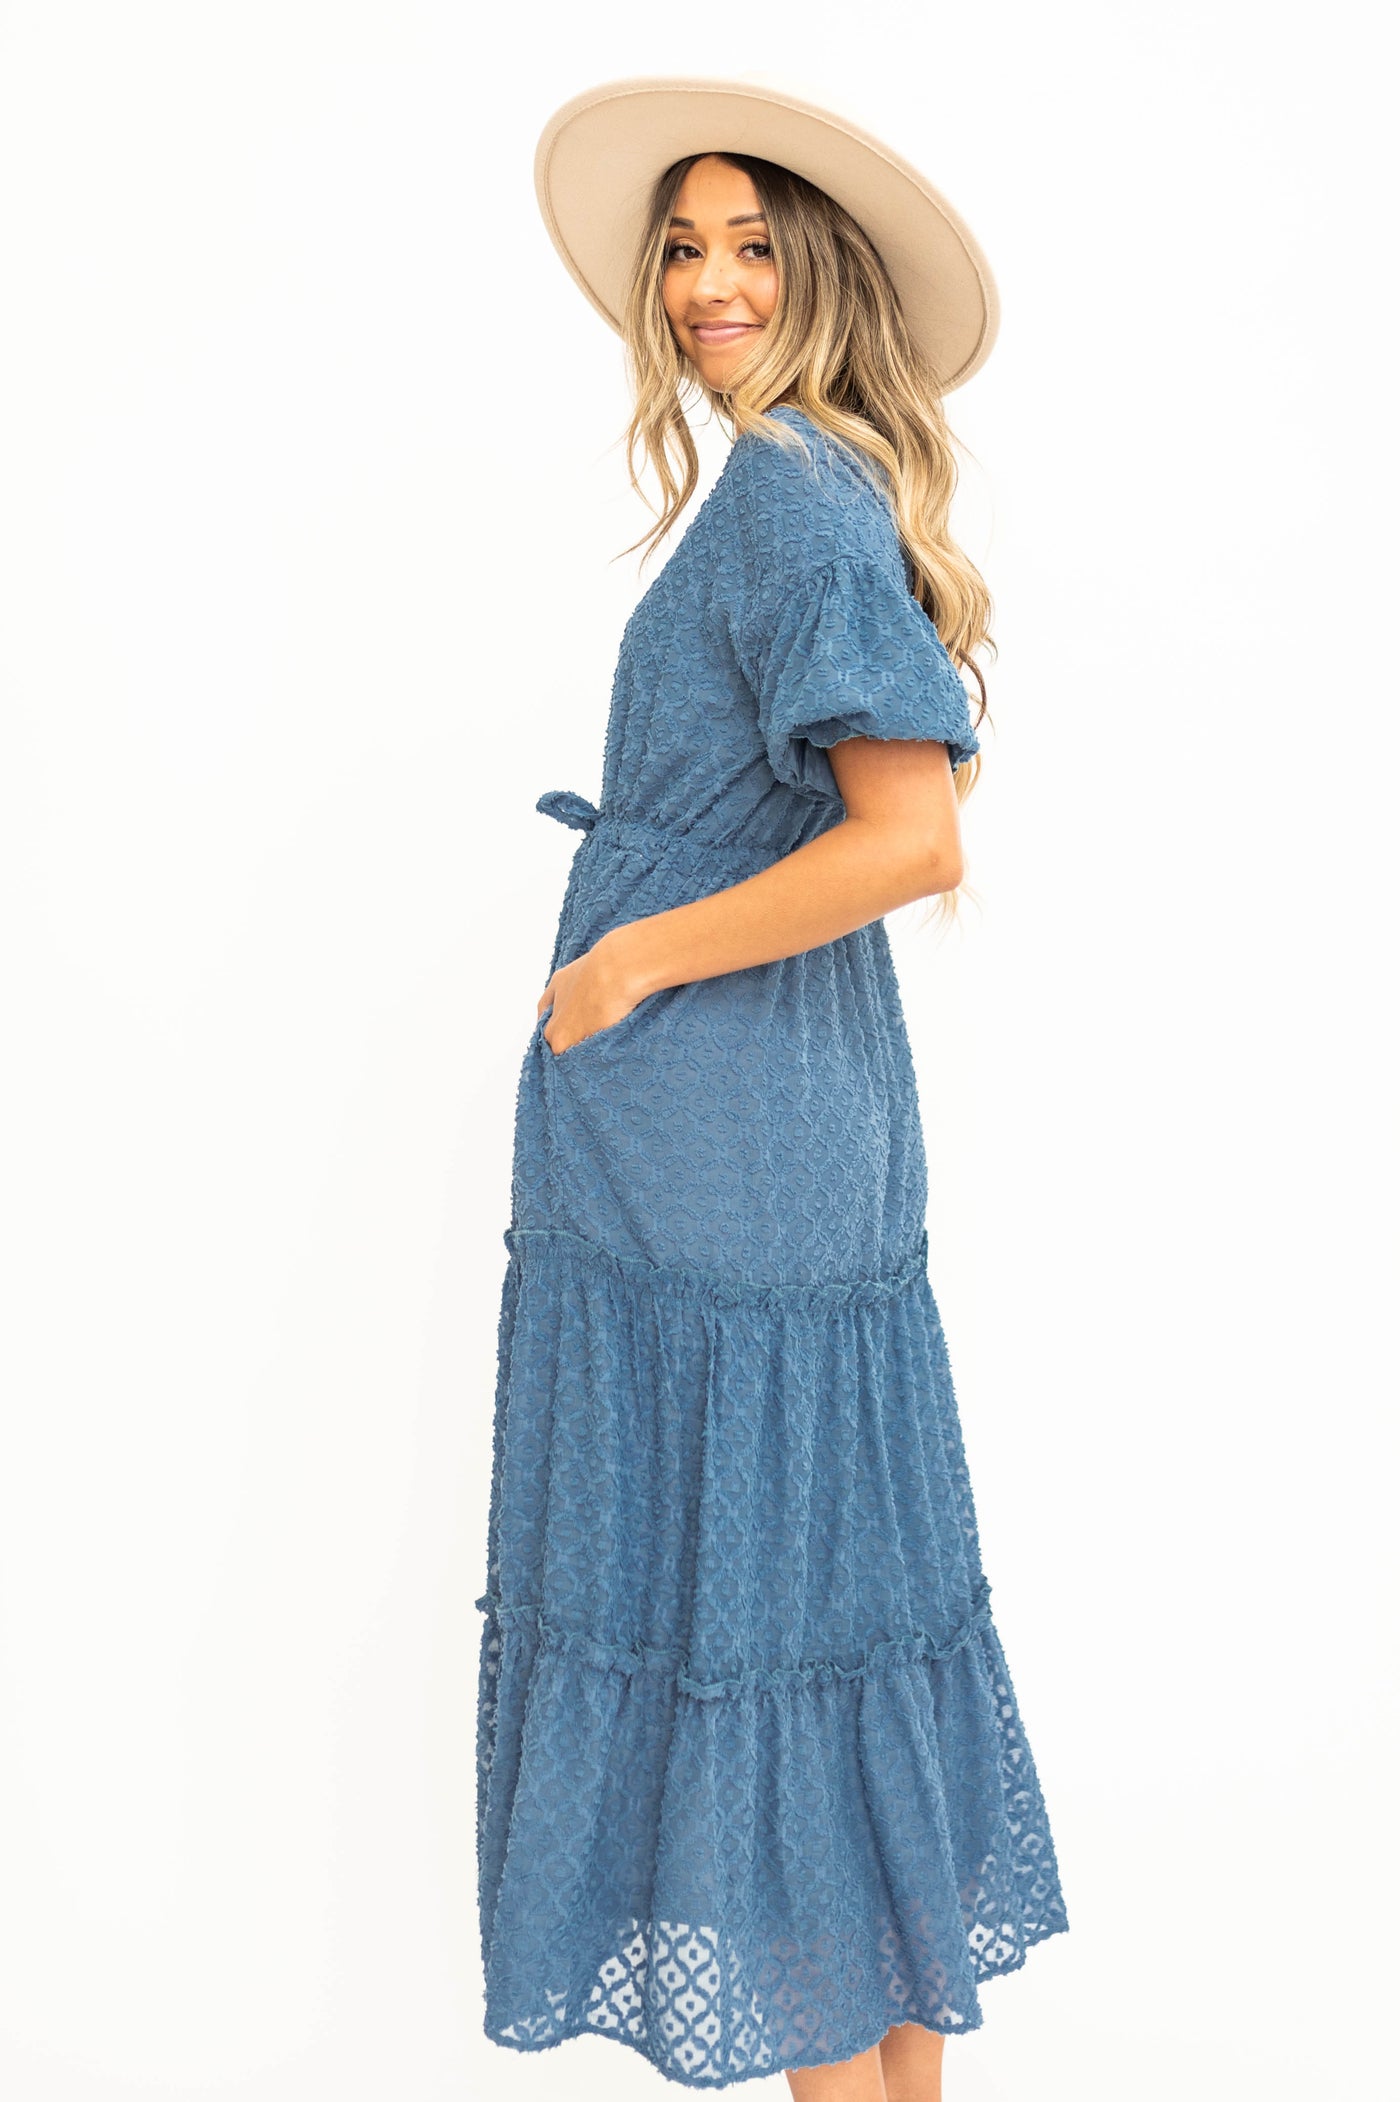 Side view of a short sleeve denim blue dress